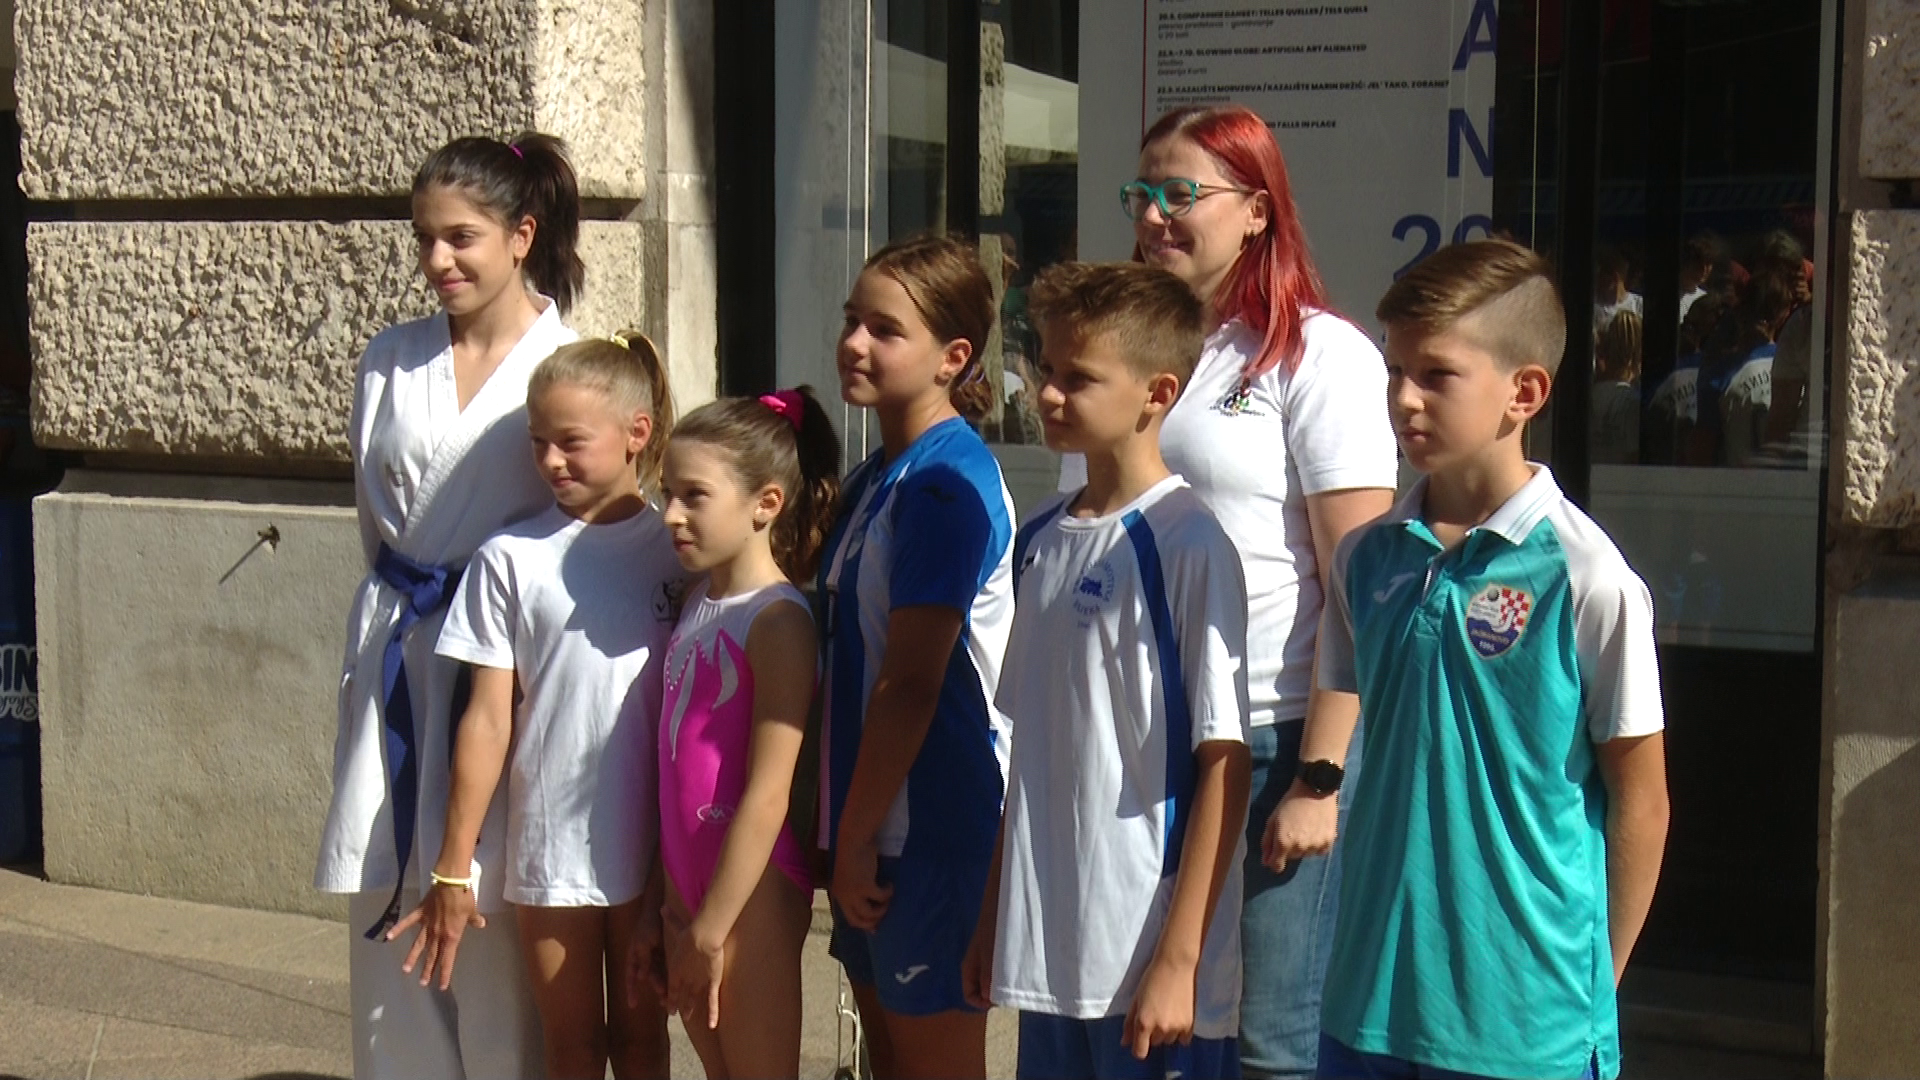 Festival sporta na Korzu:Obilježen hrvatski olimpijski dan